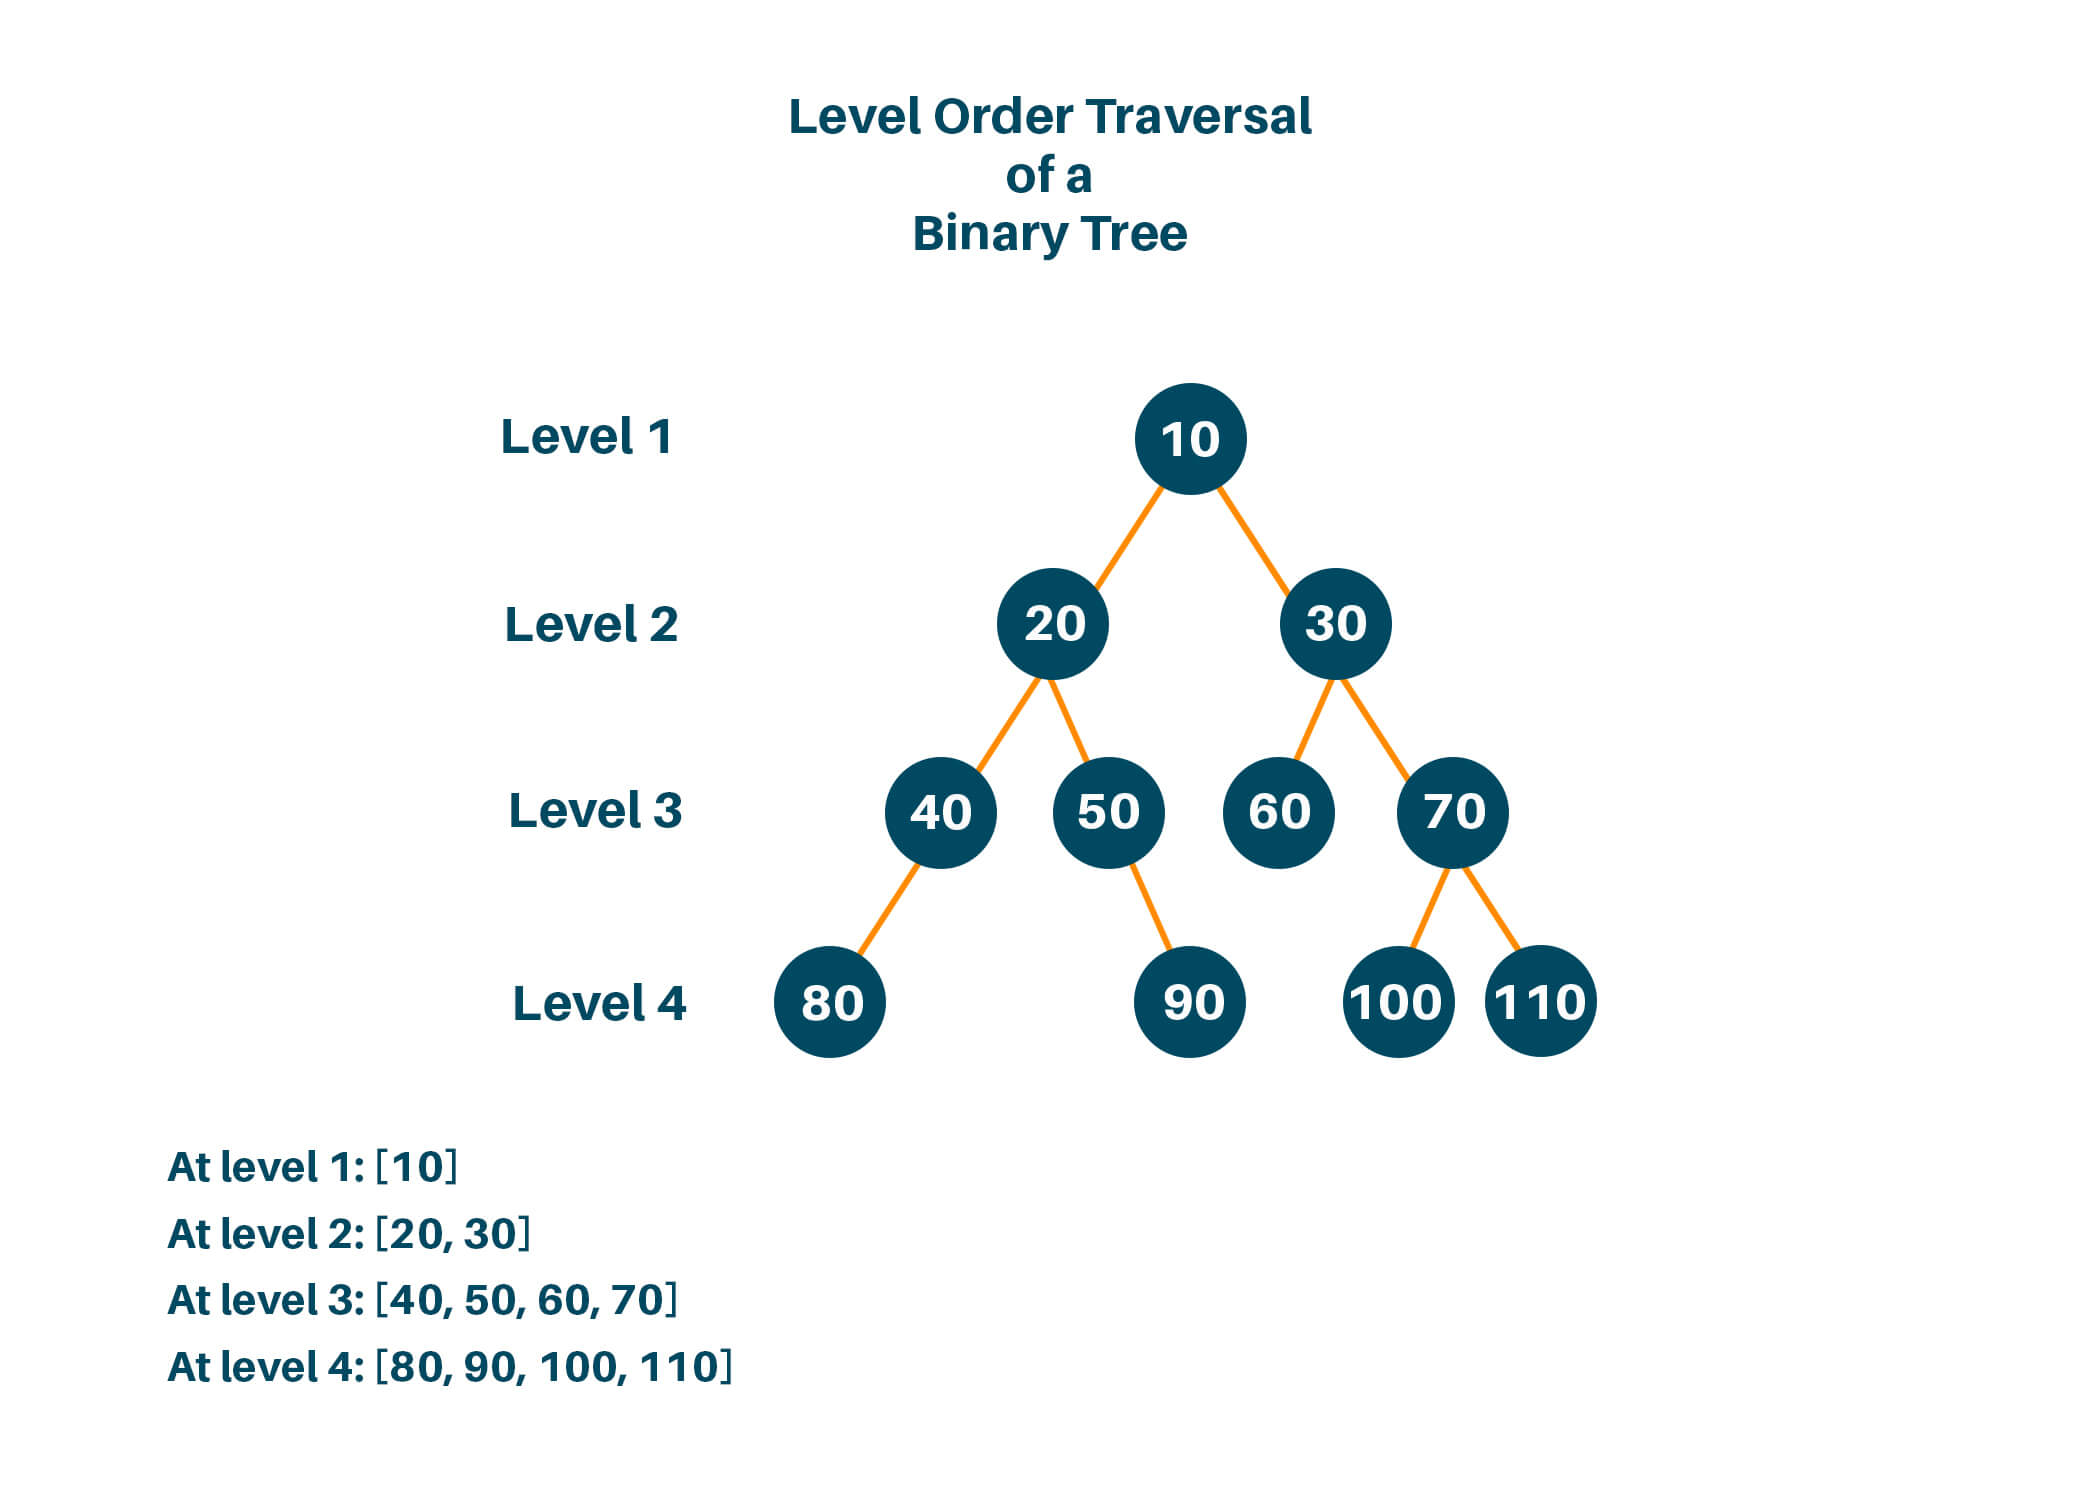 Level order traversal of a binary tree